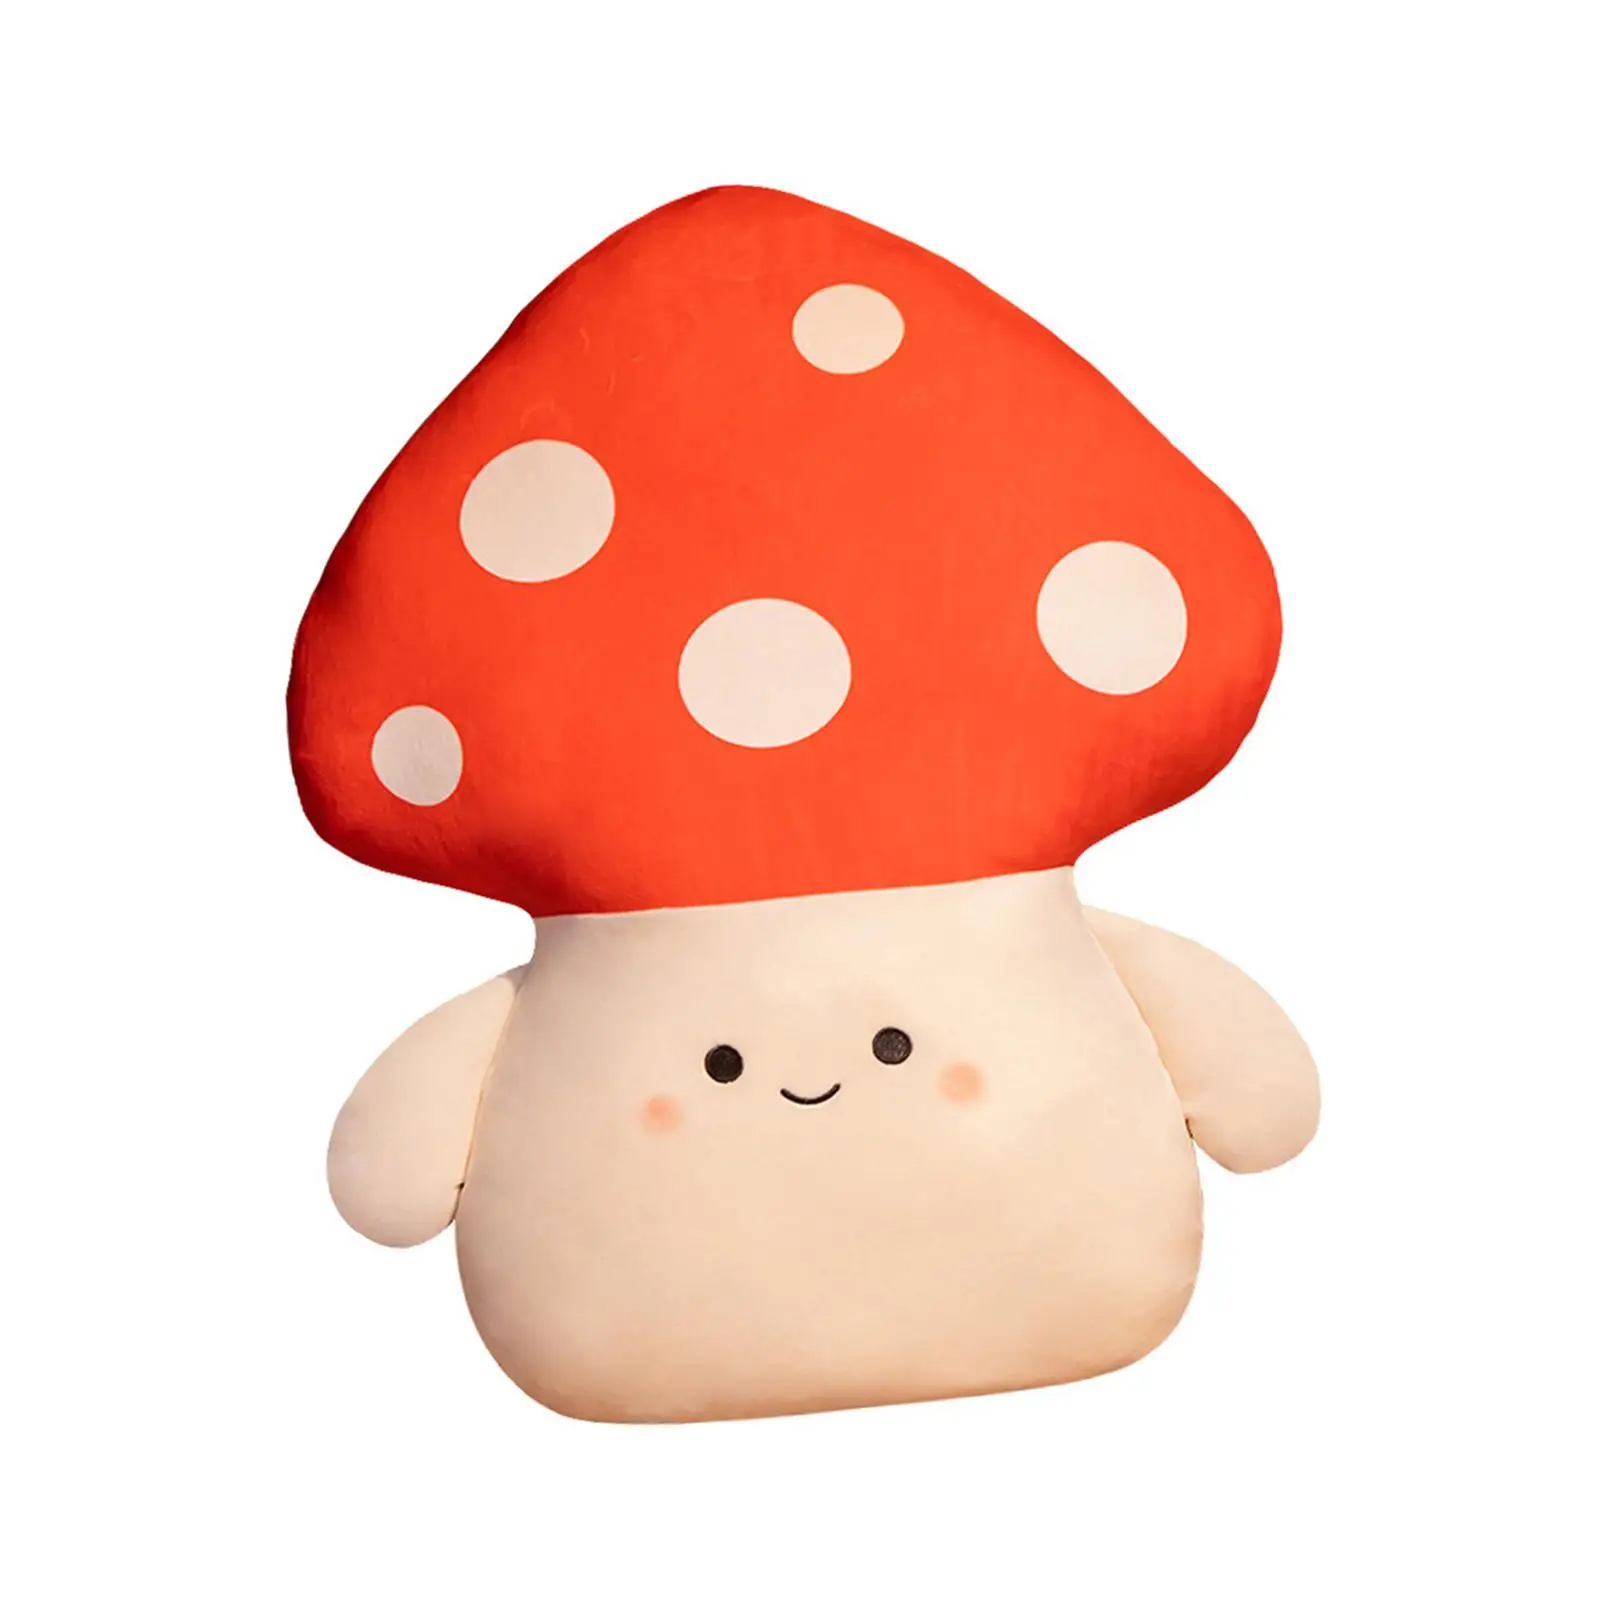 Cute Plush Mushroom Toy Stuffed Mushroom Plush Toy Ornament Soft Throw Pillow for Living Room Bedroom Decor Housewarming Gift